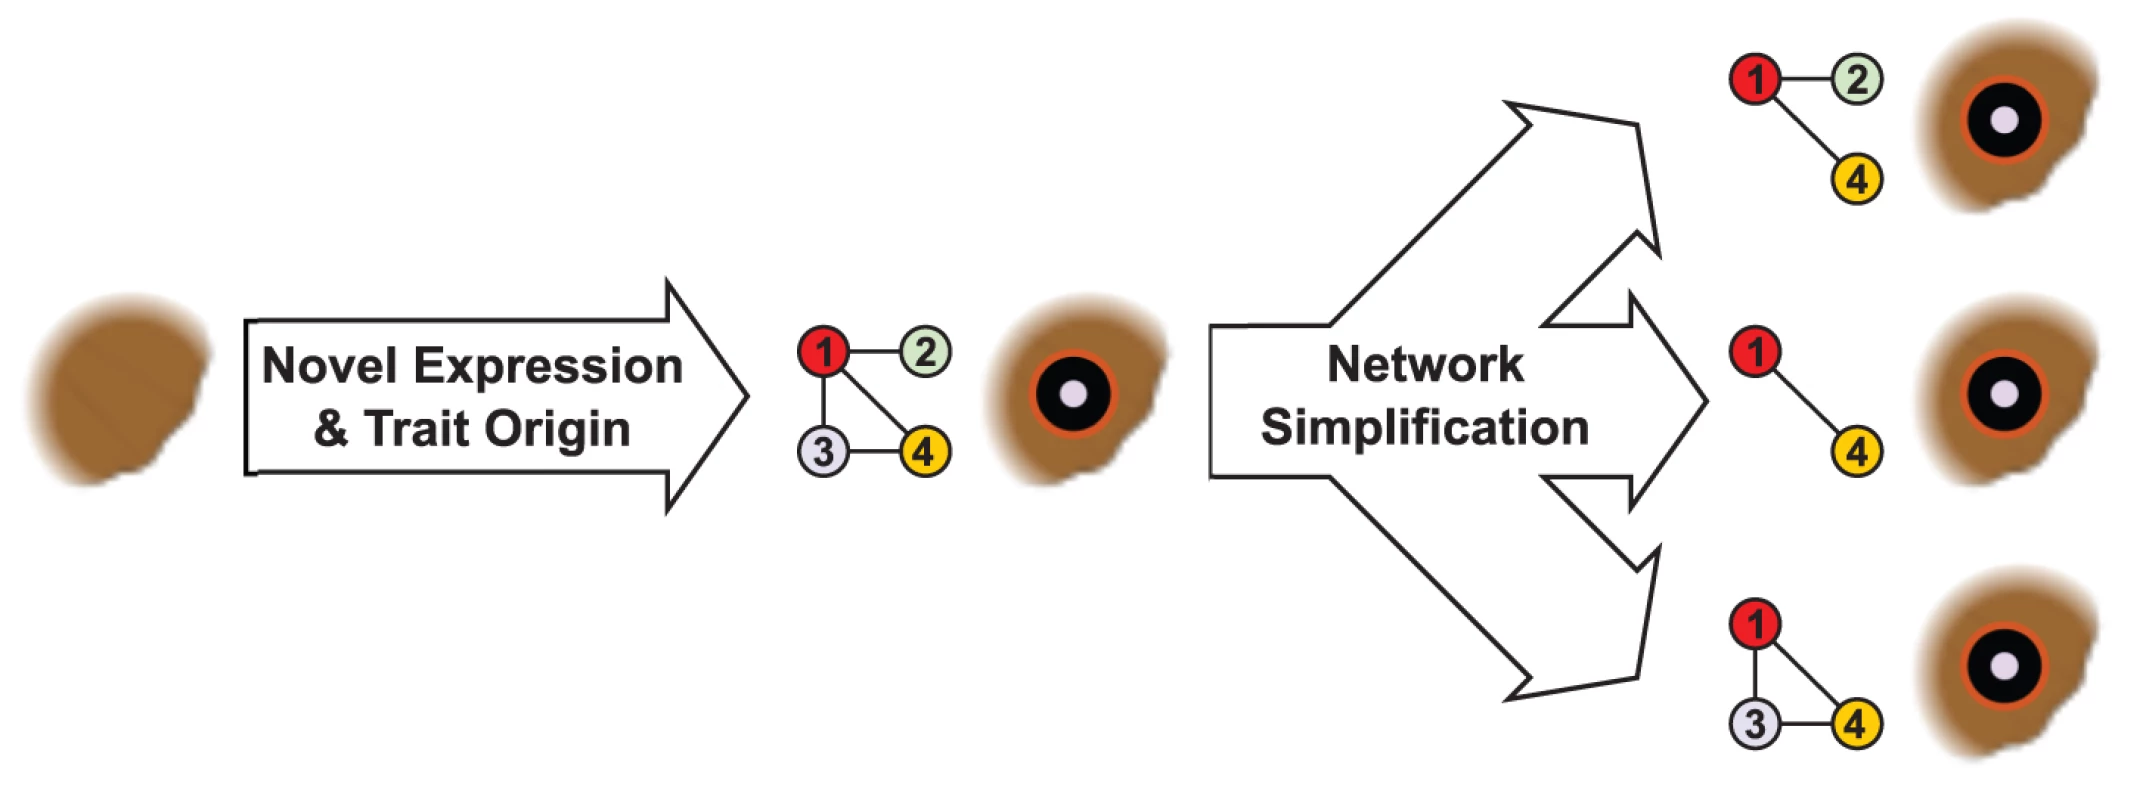 Regulatory network simplification in a complex trait.